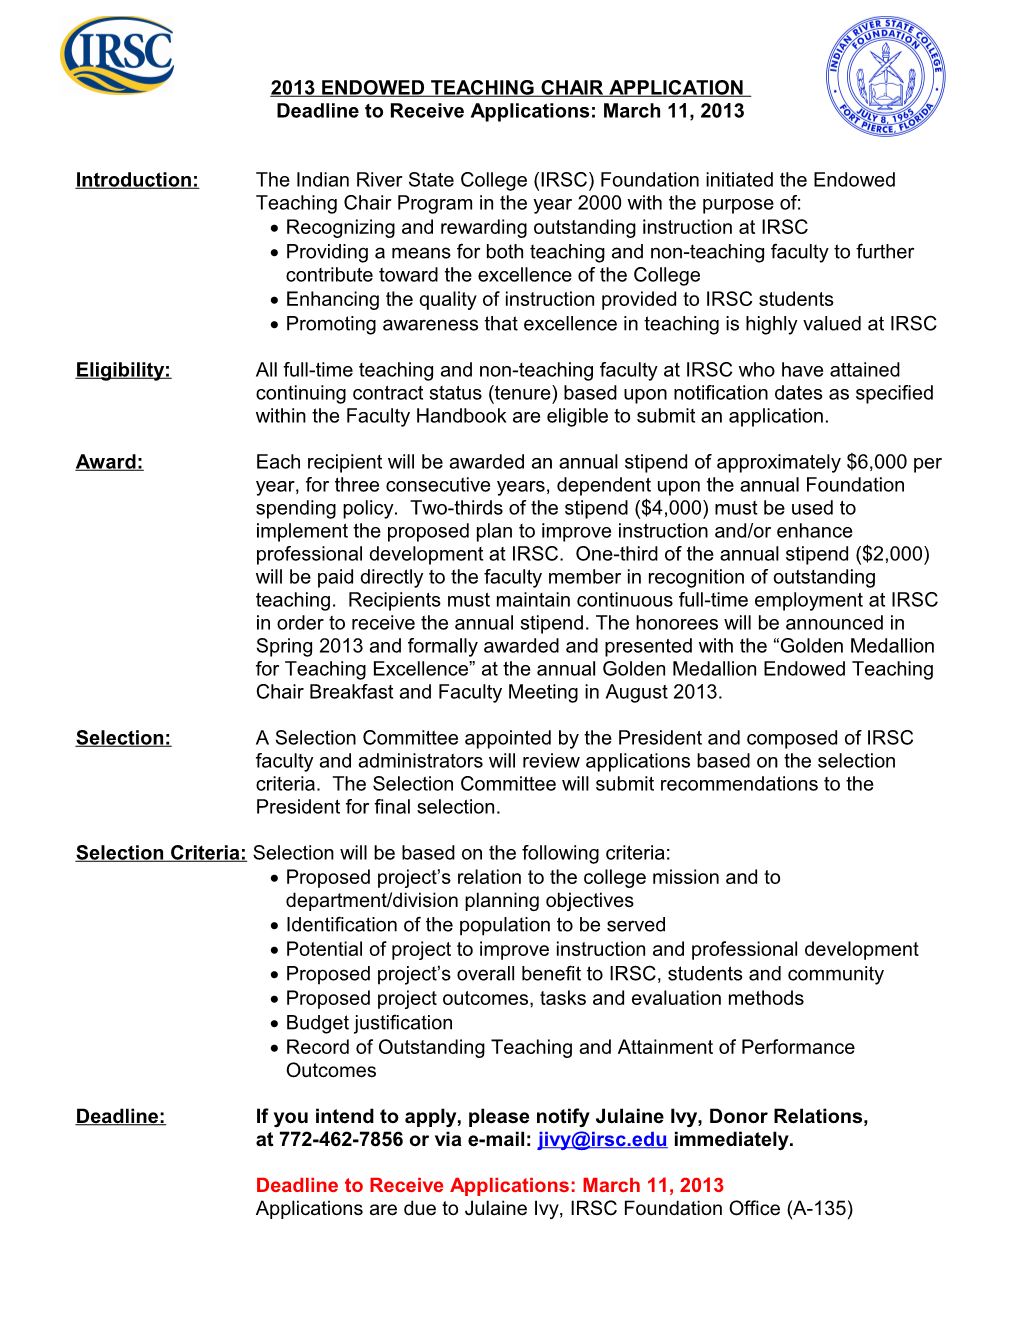 2007 Endowed Teaching Chair Application Form